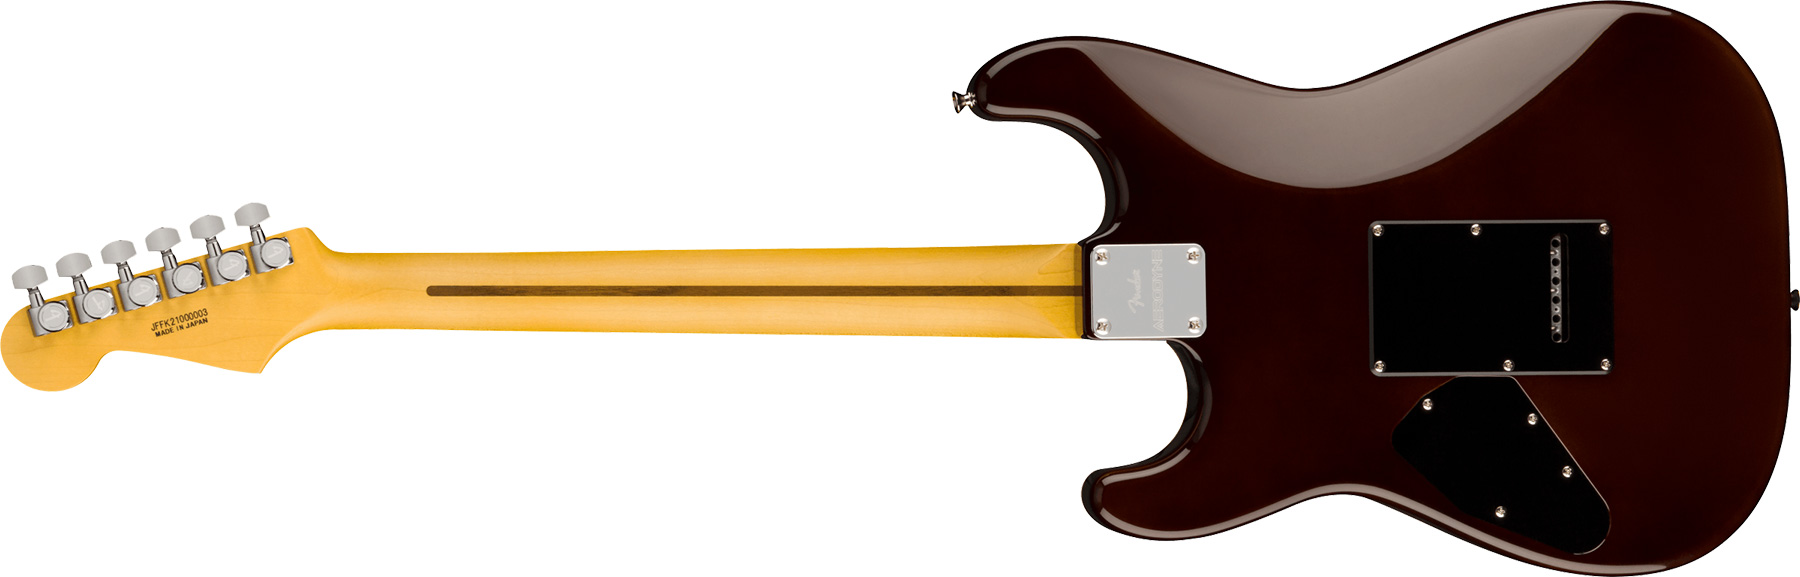 Fender Strat Aerodyne Special Jap 3s Trem Rw - Chocolate Burst - Guitarra eléctrica con forma de str. - Variation 1